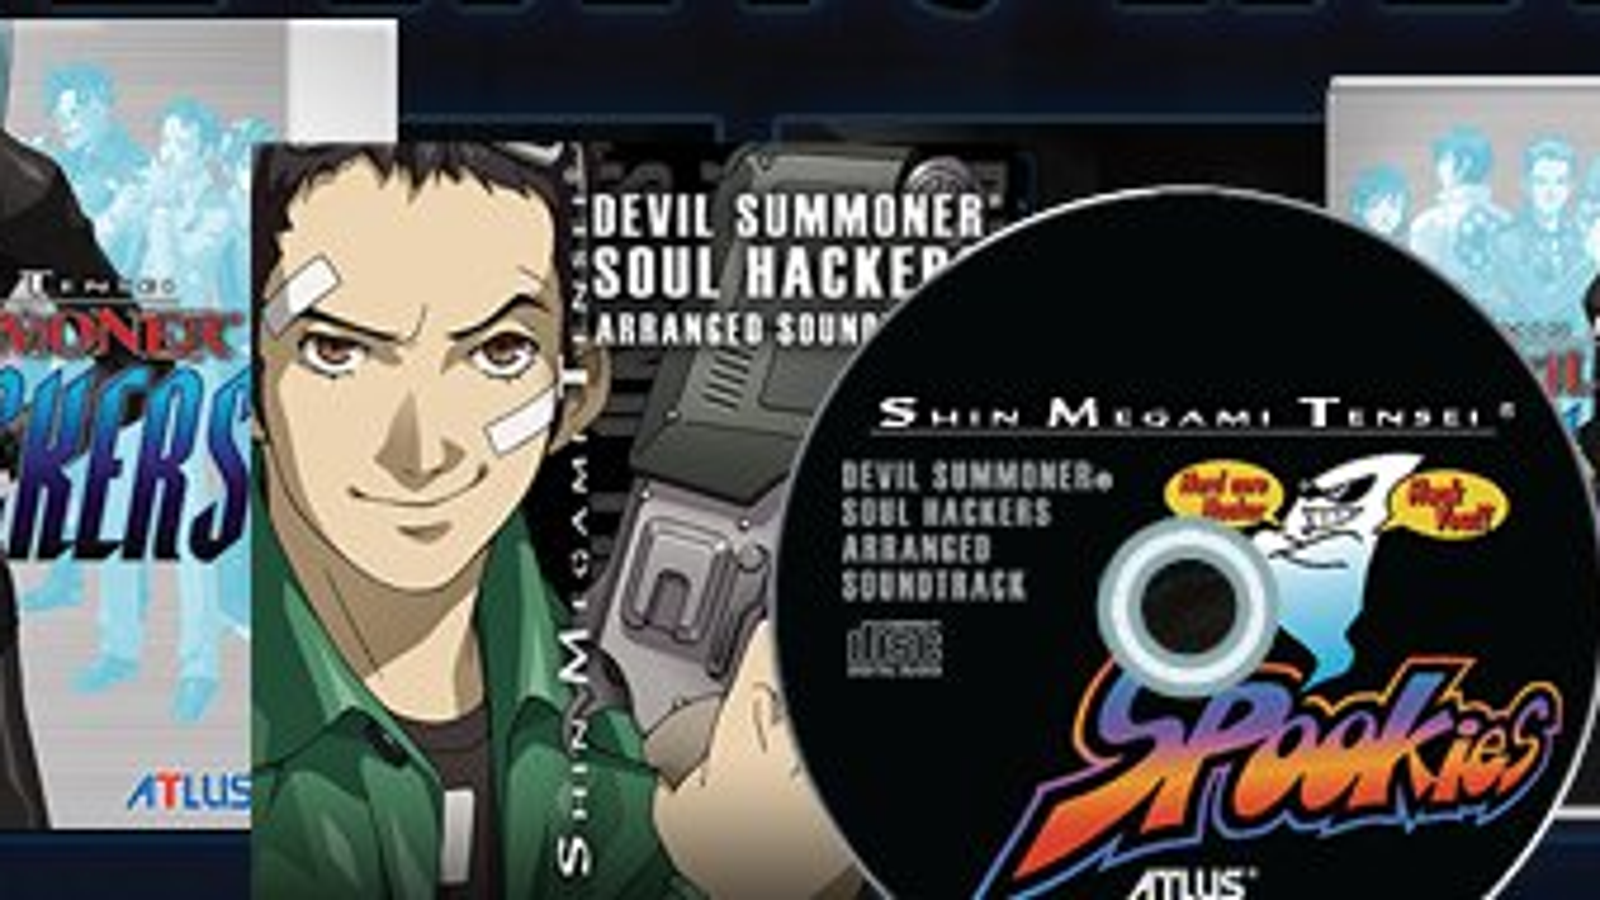 Shin Megami Tensei: Devil Summoner - Soul Hackers for Nintendo 3DS